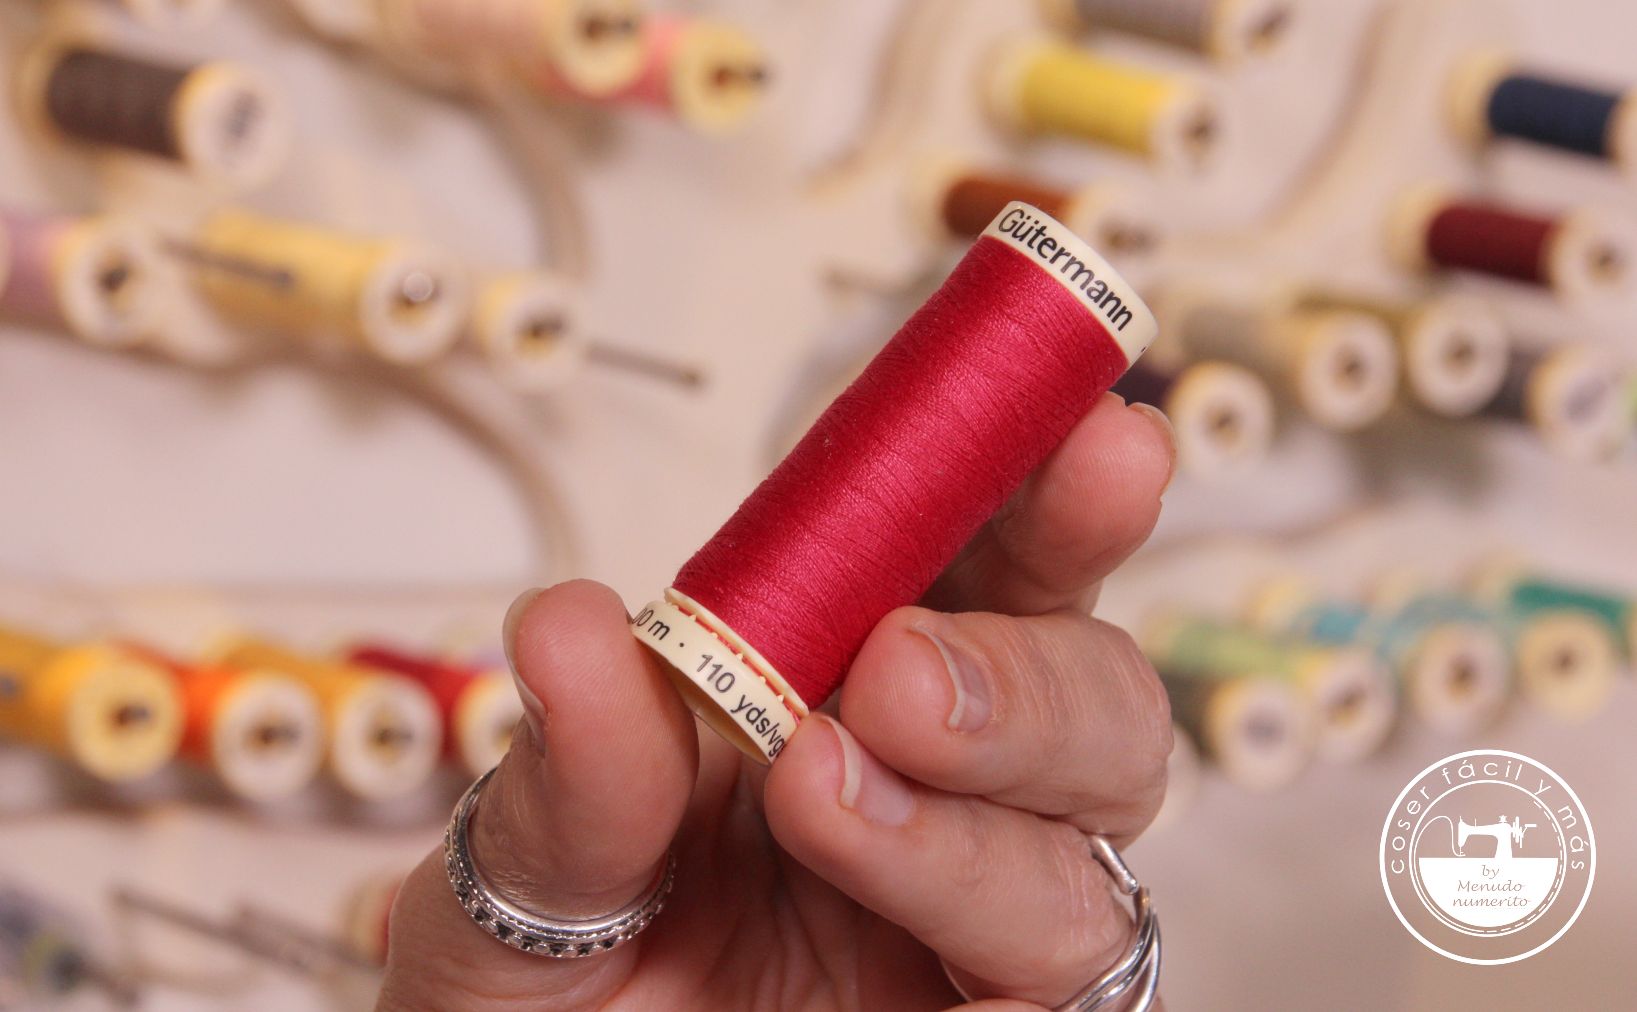 Tipos de hilo para coser a máquina